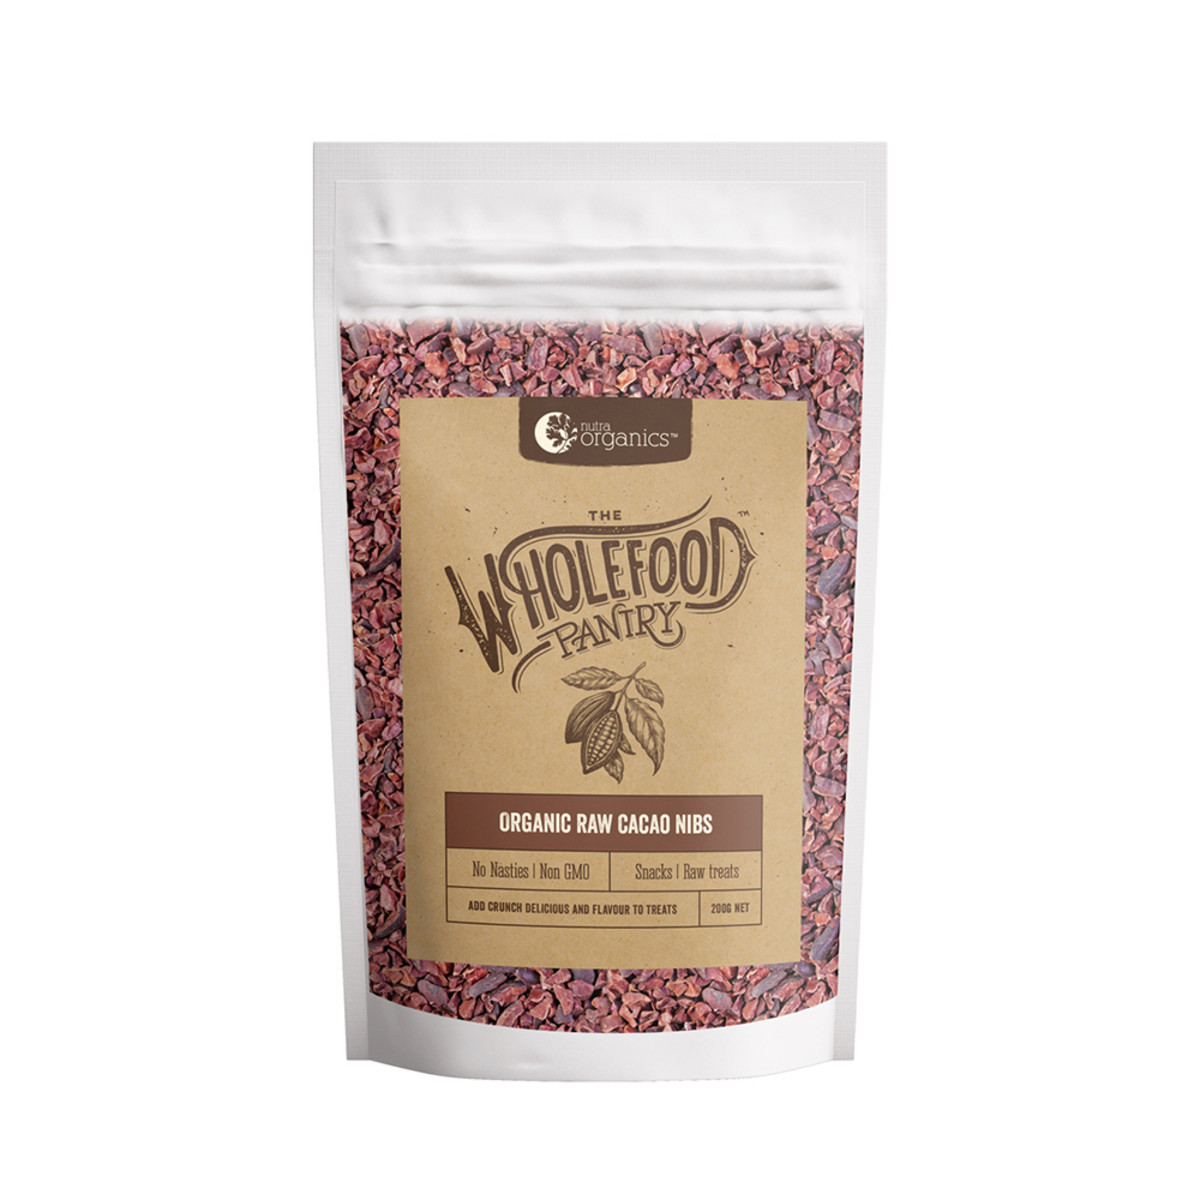 NUTRA ORGANICS - THE WHOLEFOOD PANTRY Organic Raw Cacao Nibs